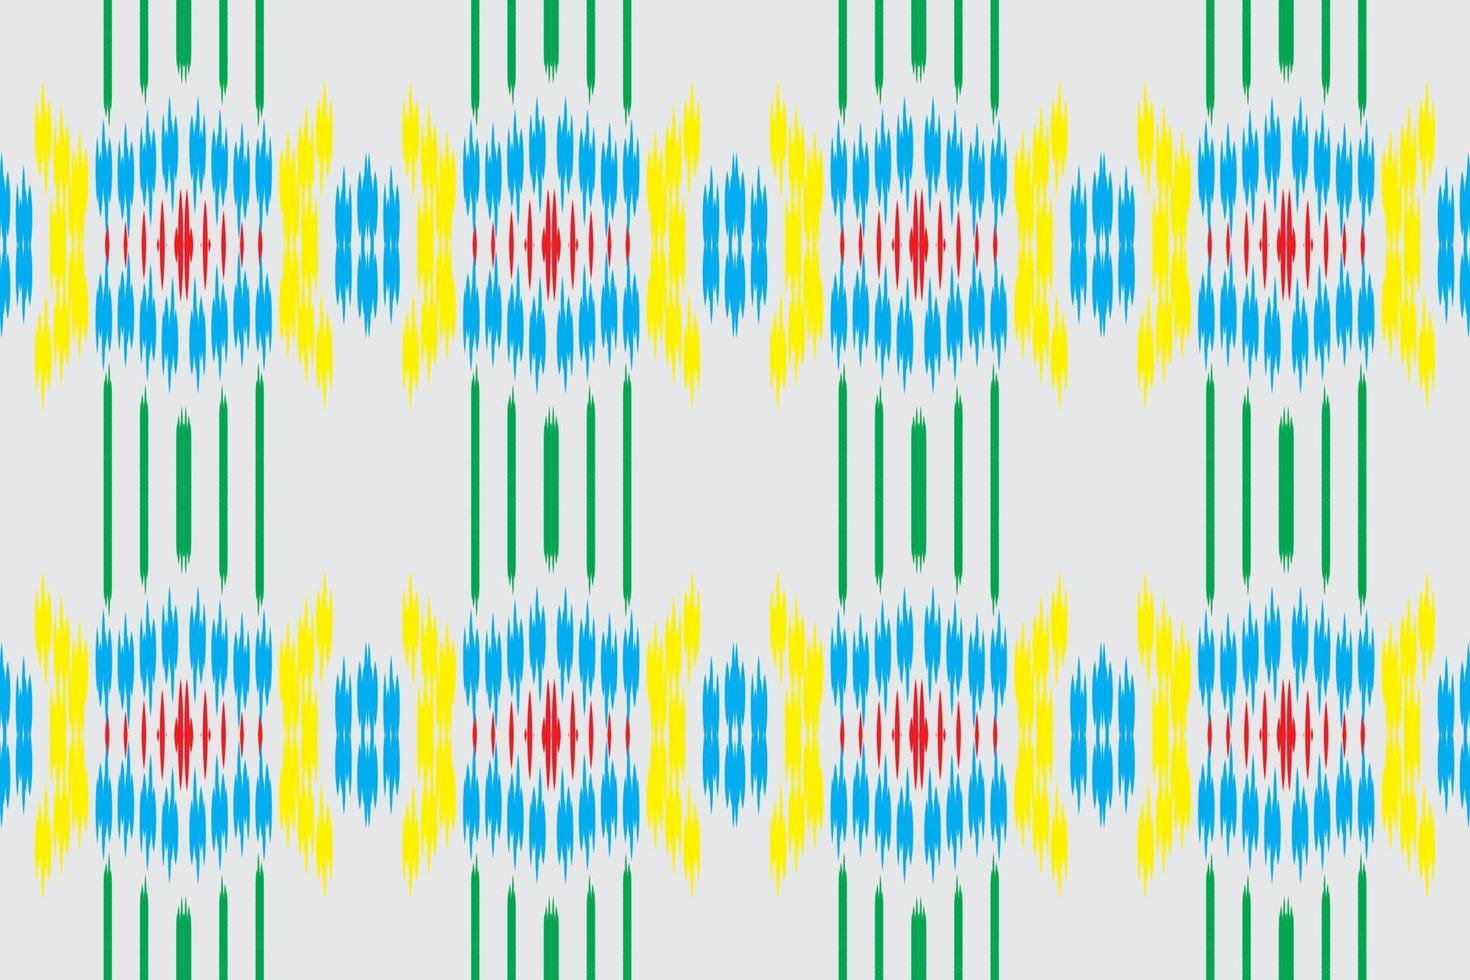 motivo ikat floral tribal azteca borneo escandinavo batik bohemio textura vector digital diseño para imprimir saree kurti tela cepillo símbolos muestras